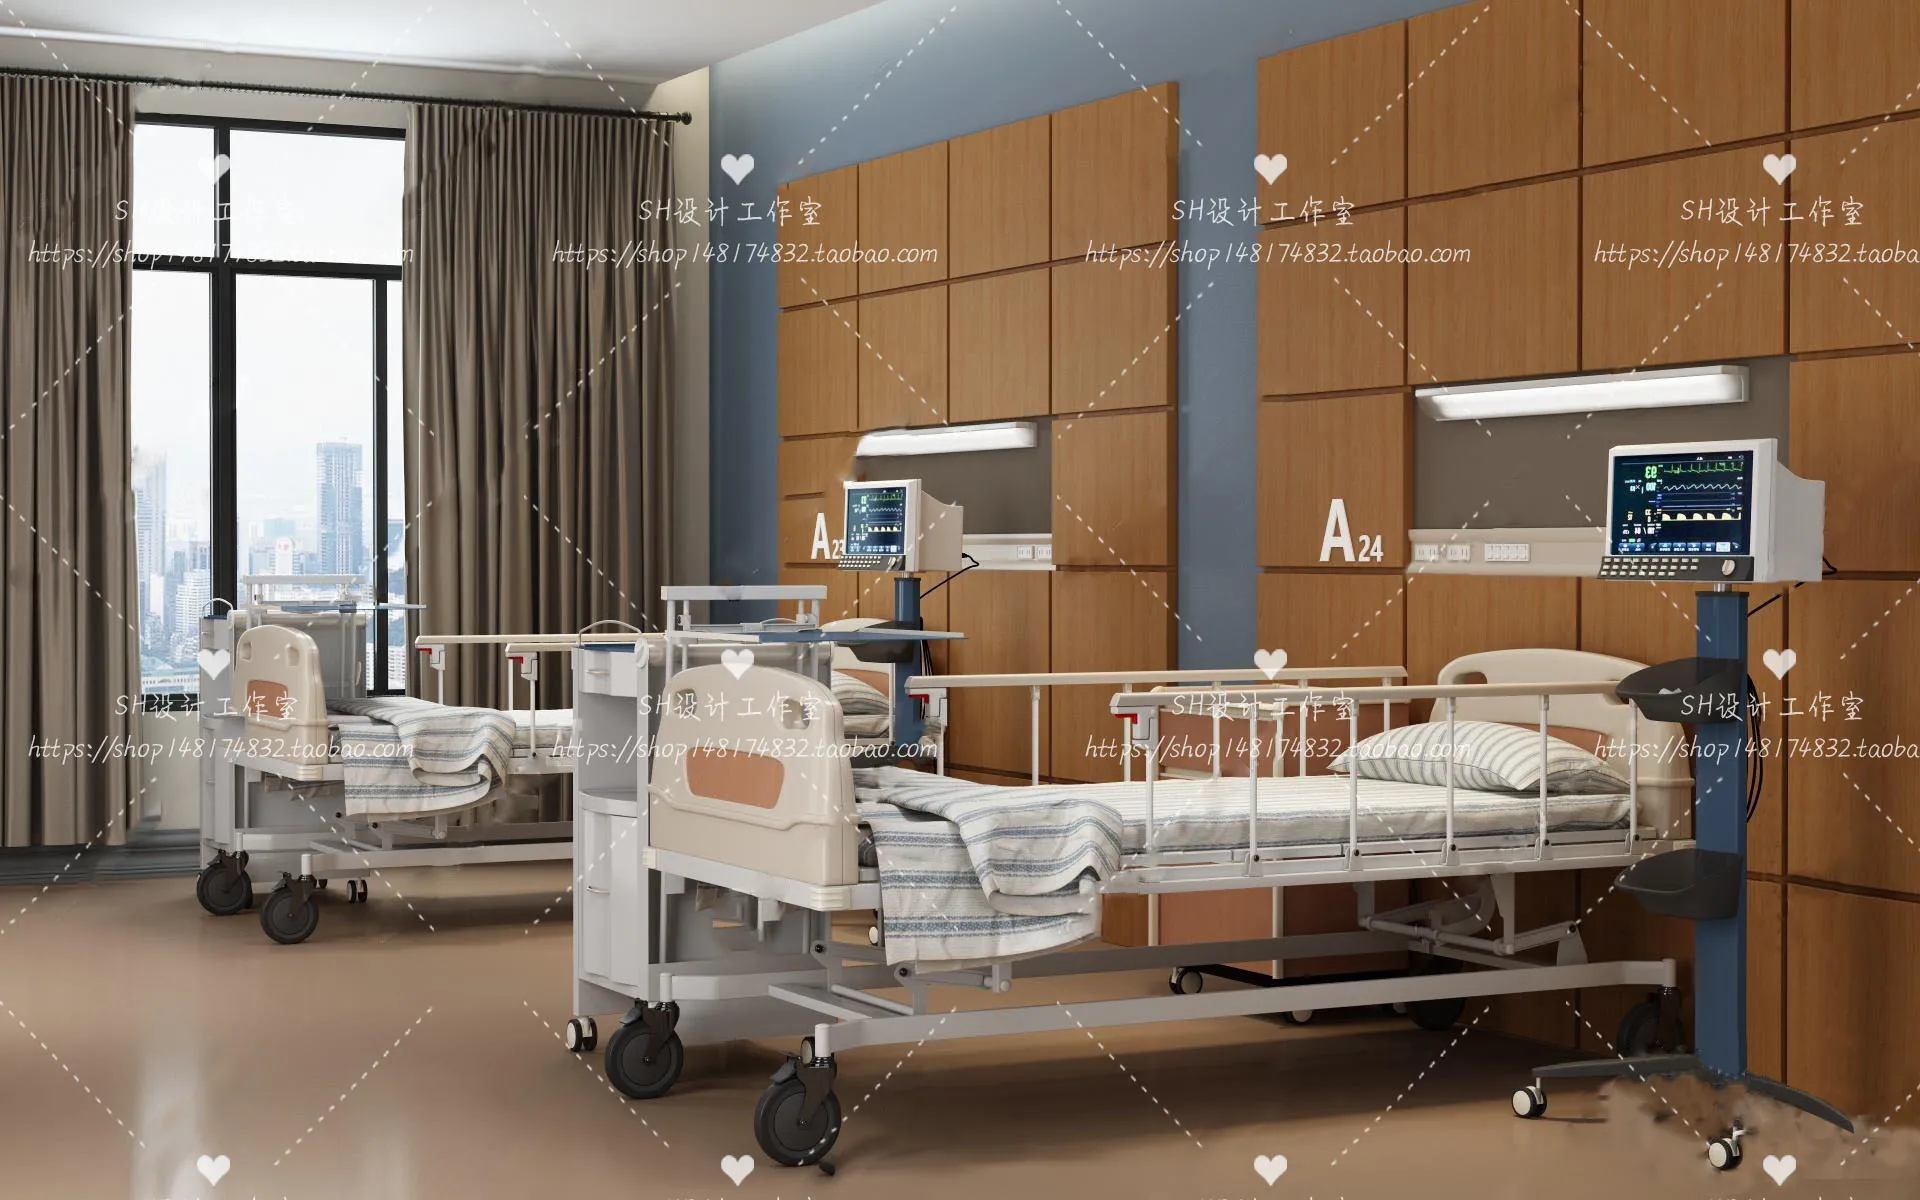 HOSPITAL 3D SCENES – VRAY RENDER – 023